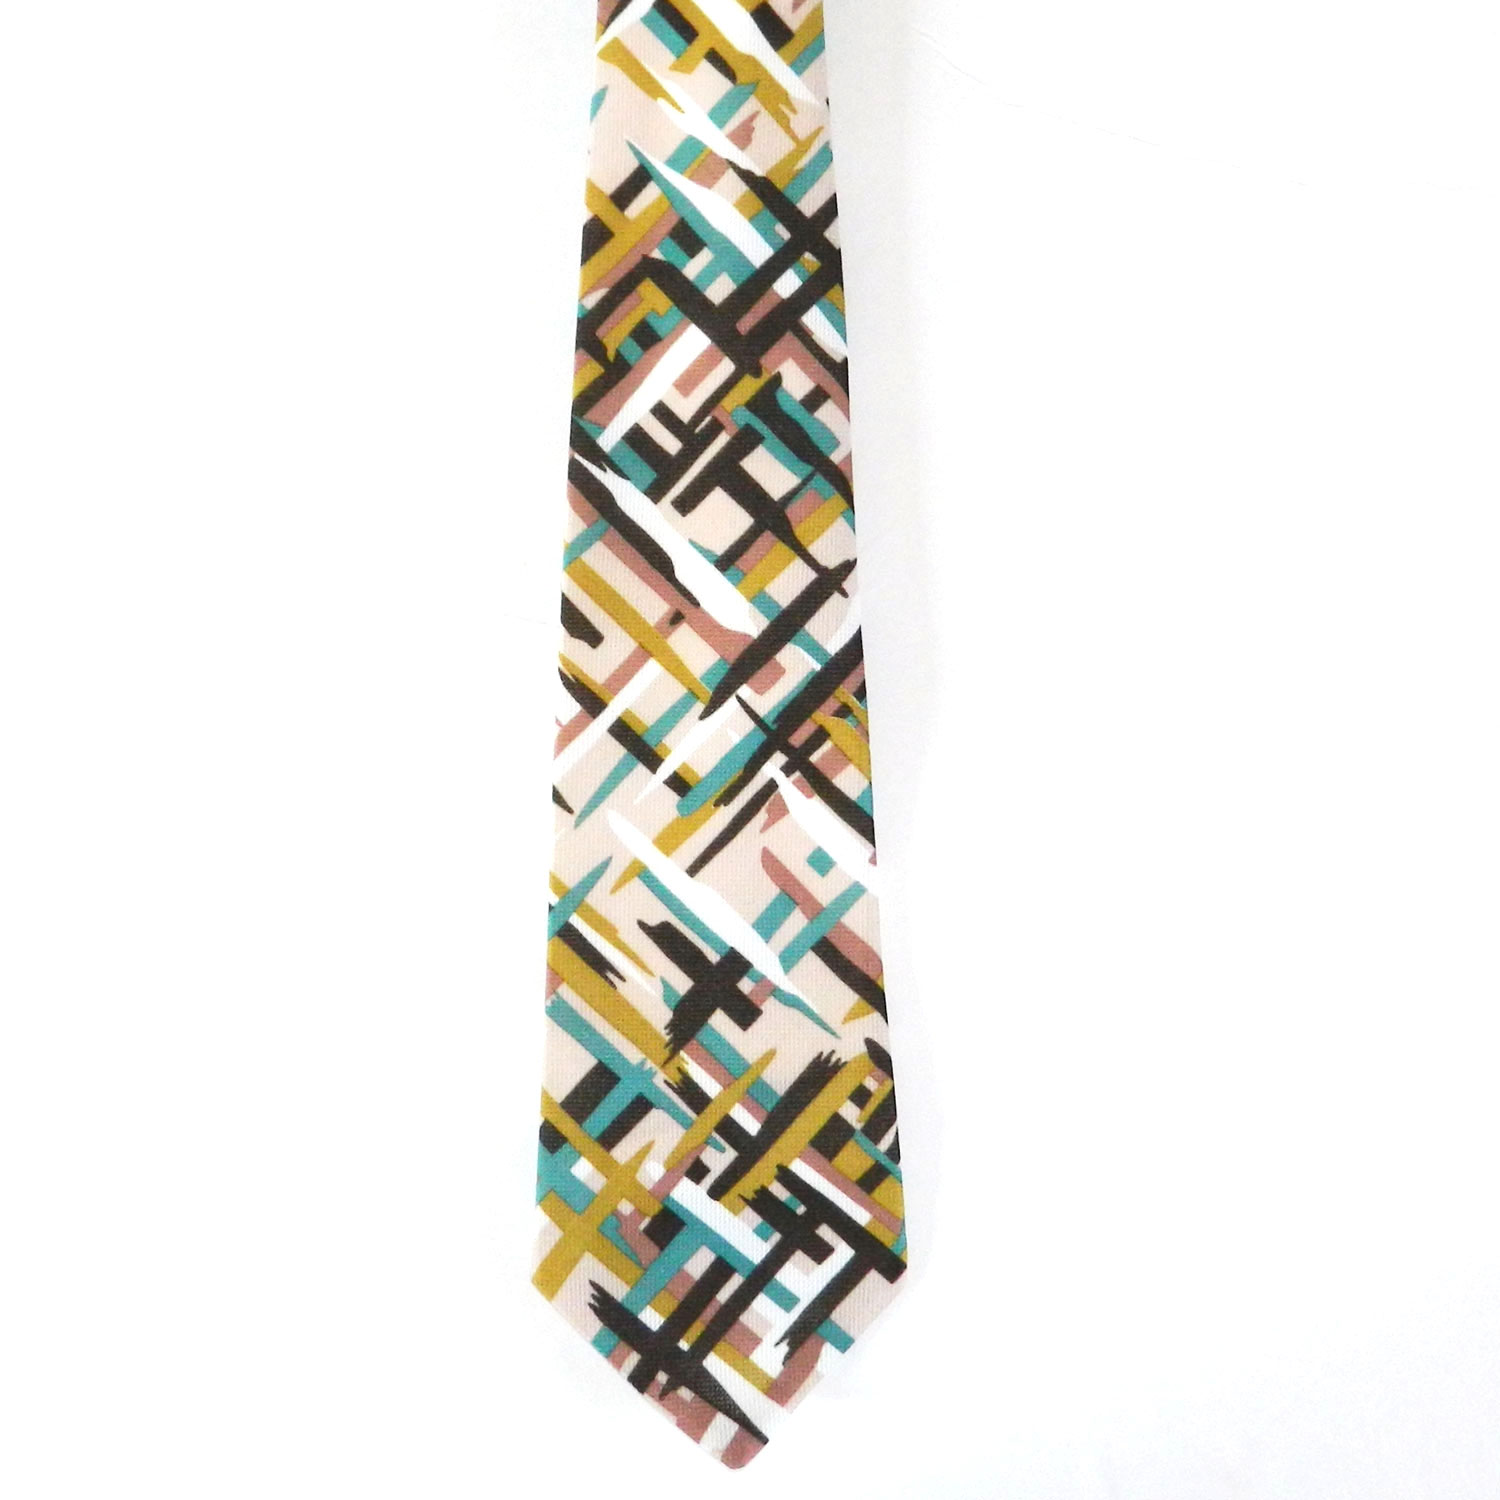 1970's tie